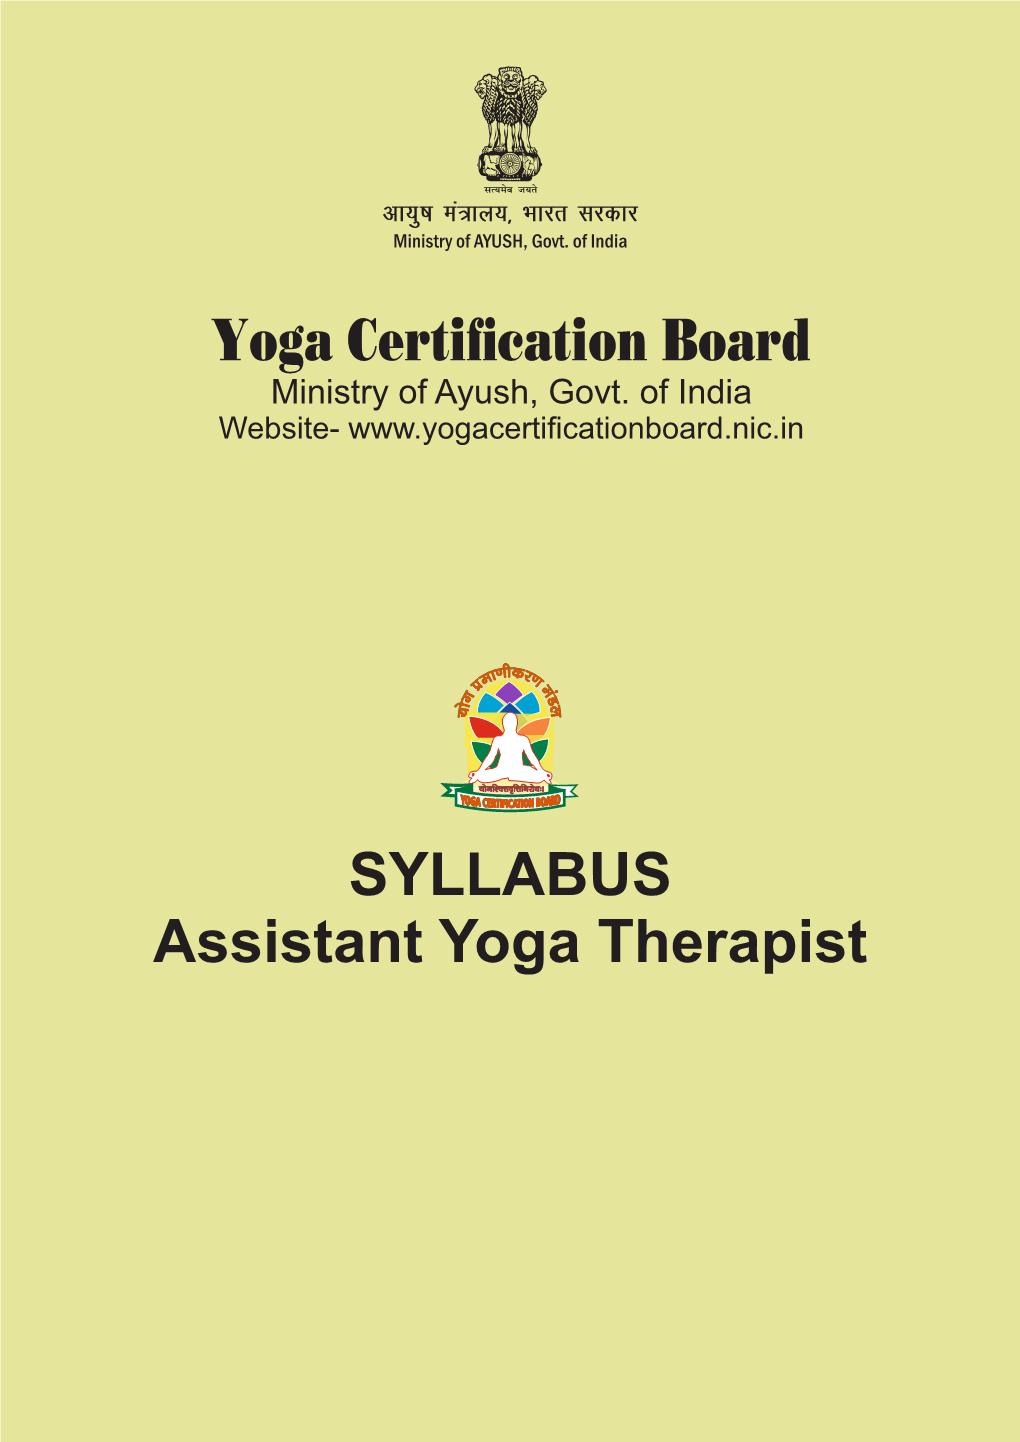 SYLLABUS Assistant Yoga Therapist Yoga Certification Board